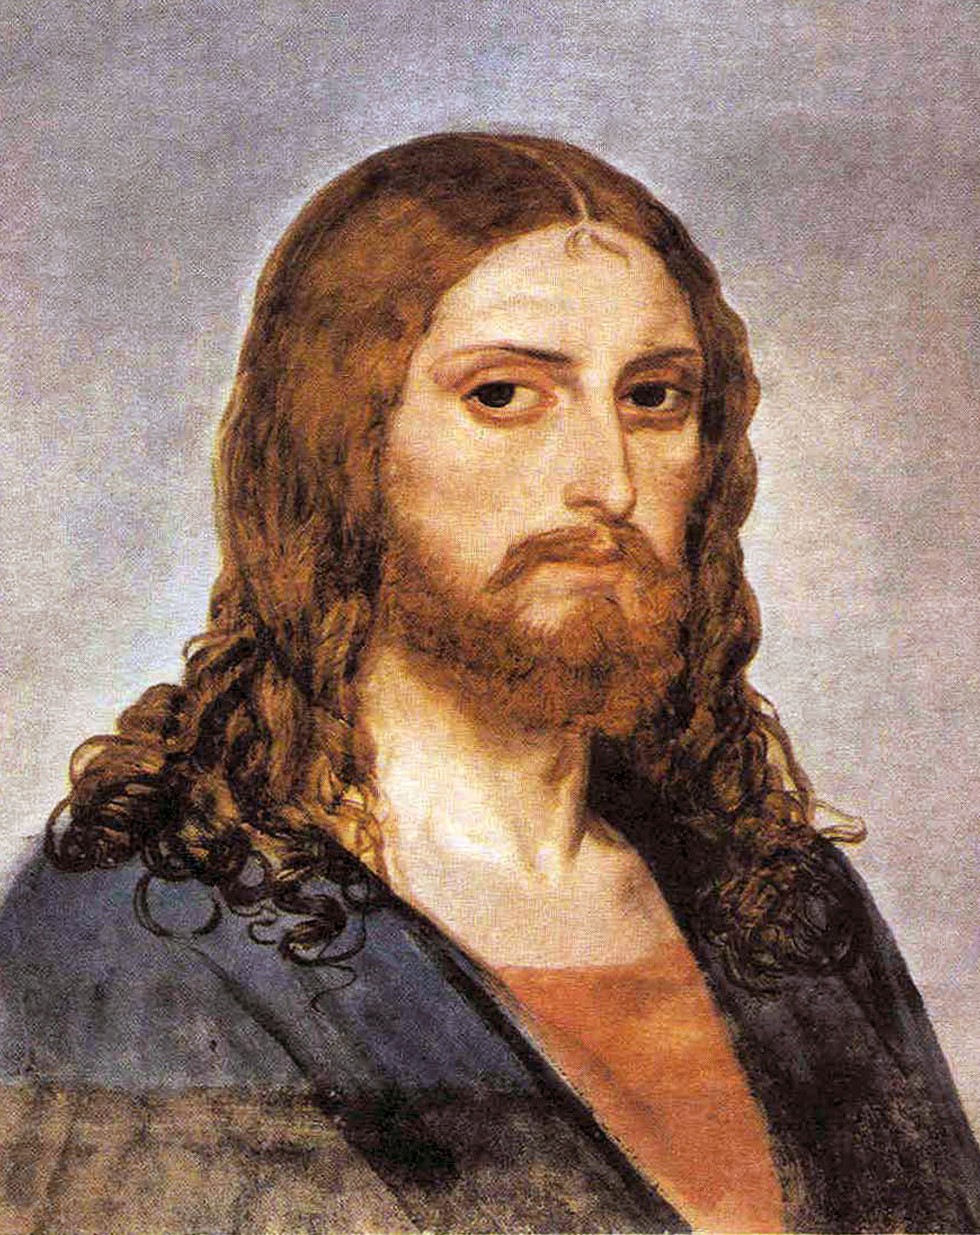 Christ. Etude. Alexander Ivanov. 1840s